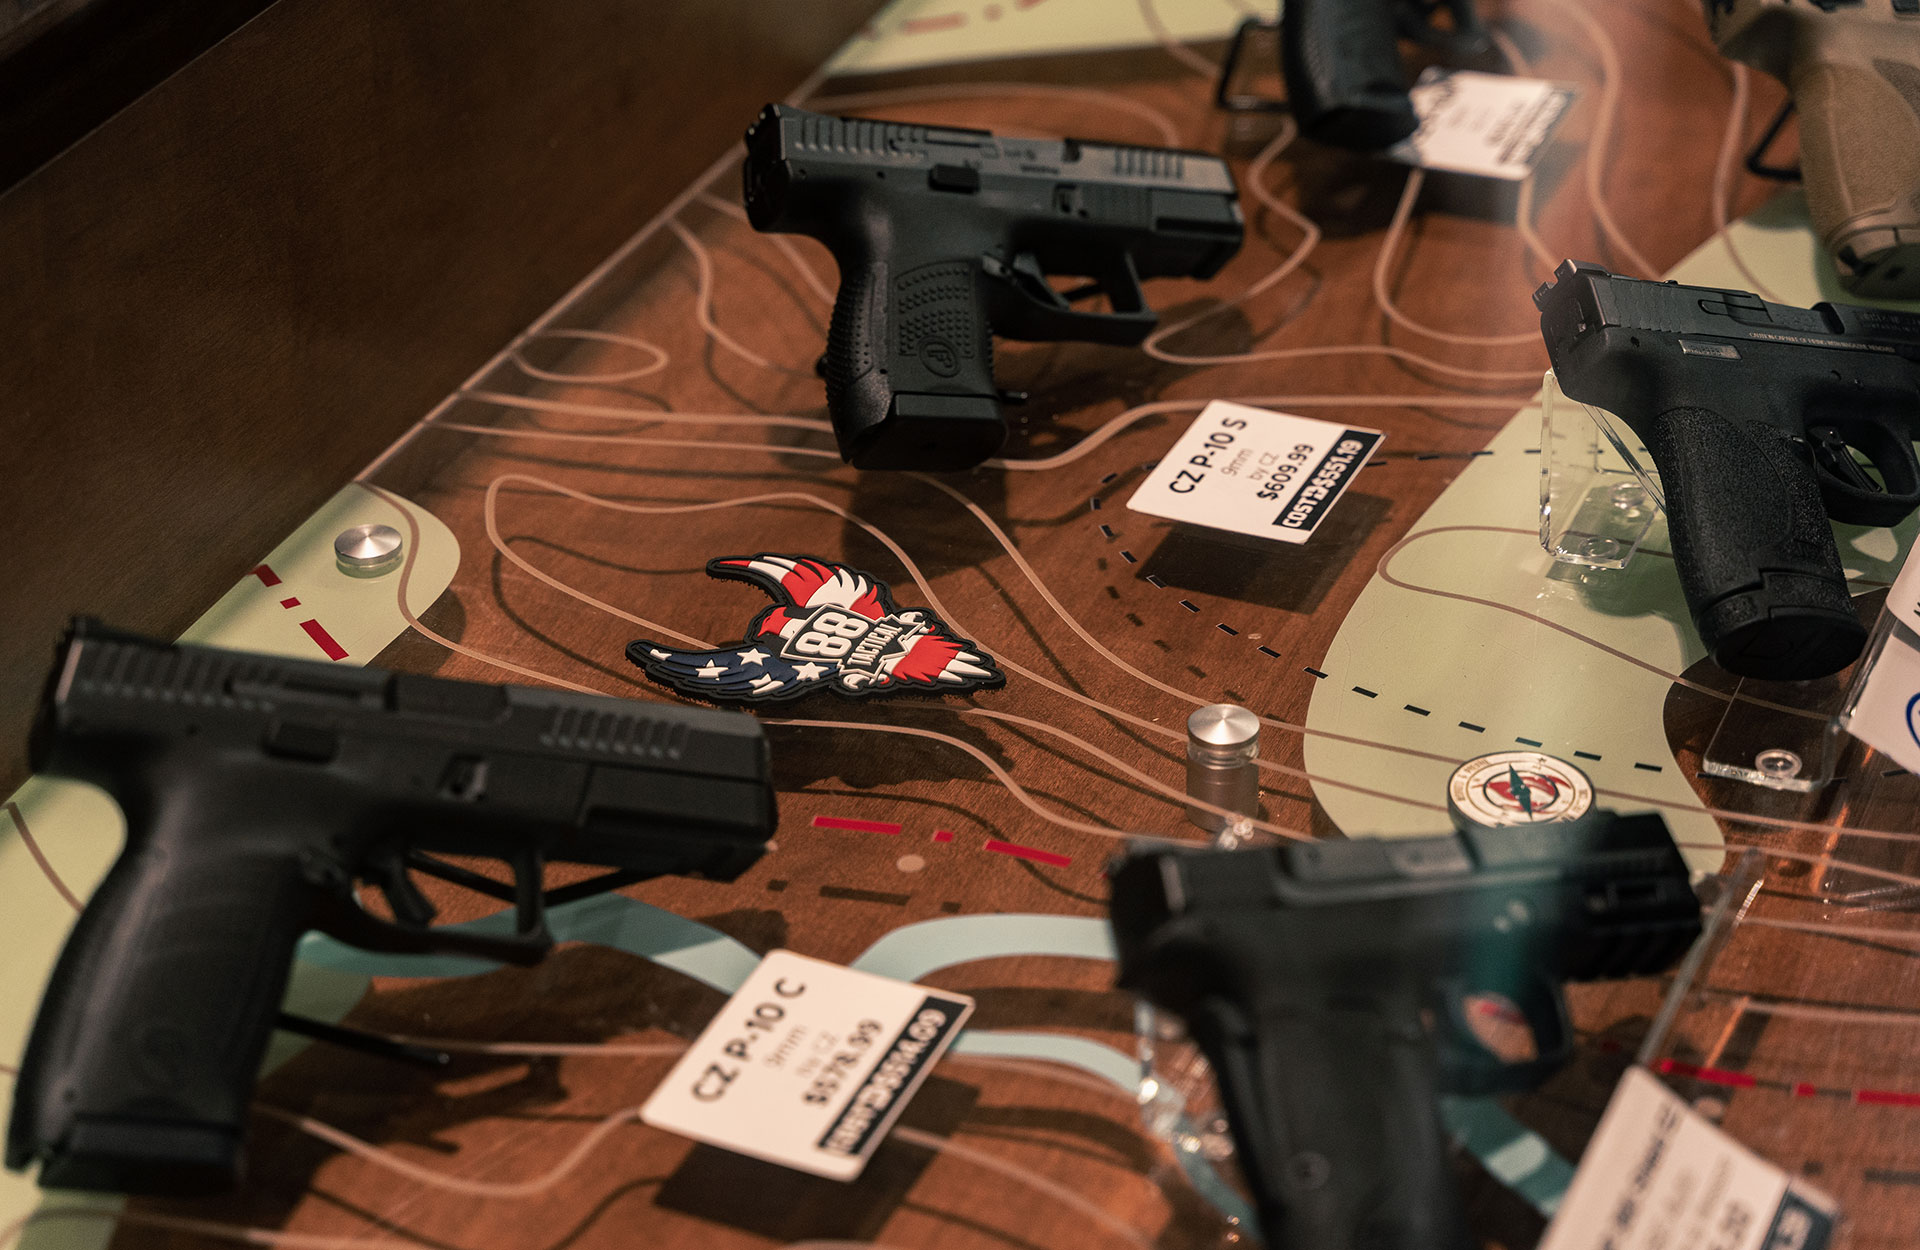 88 Tactical Pistols at firearm pro shop